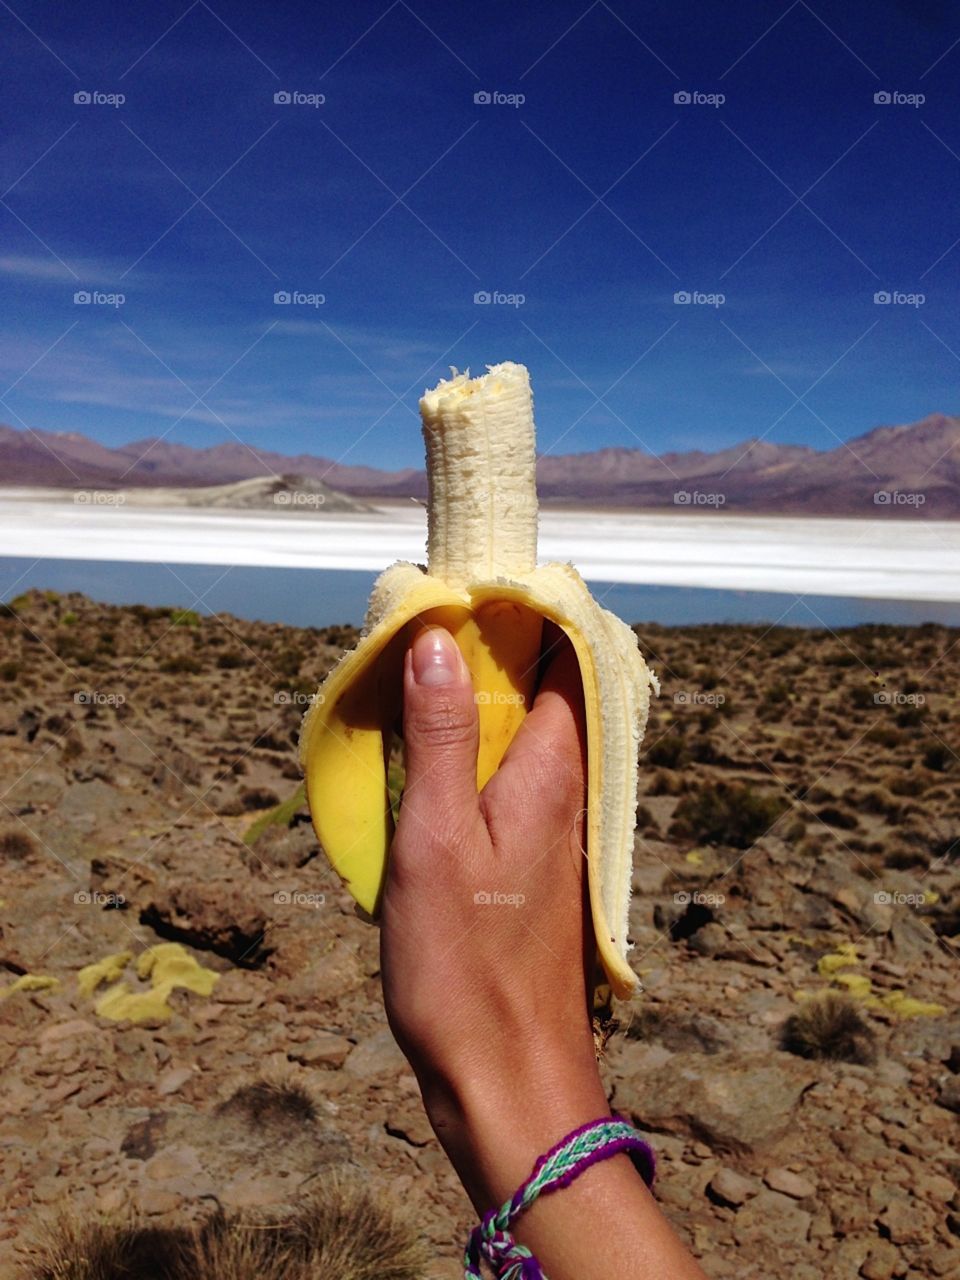 banana lover 